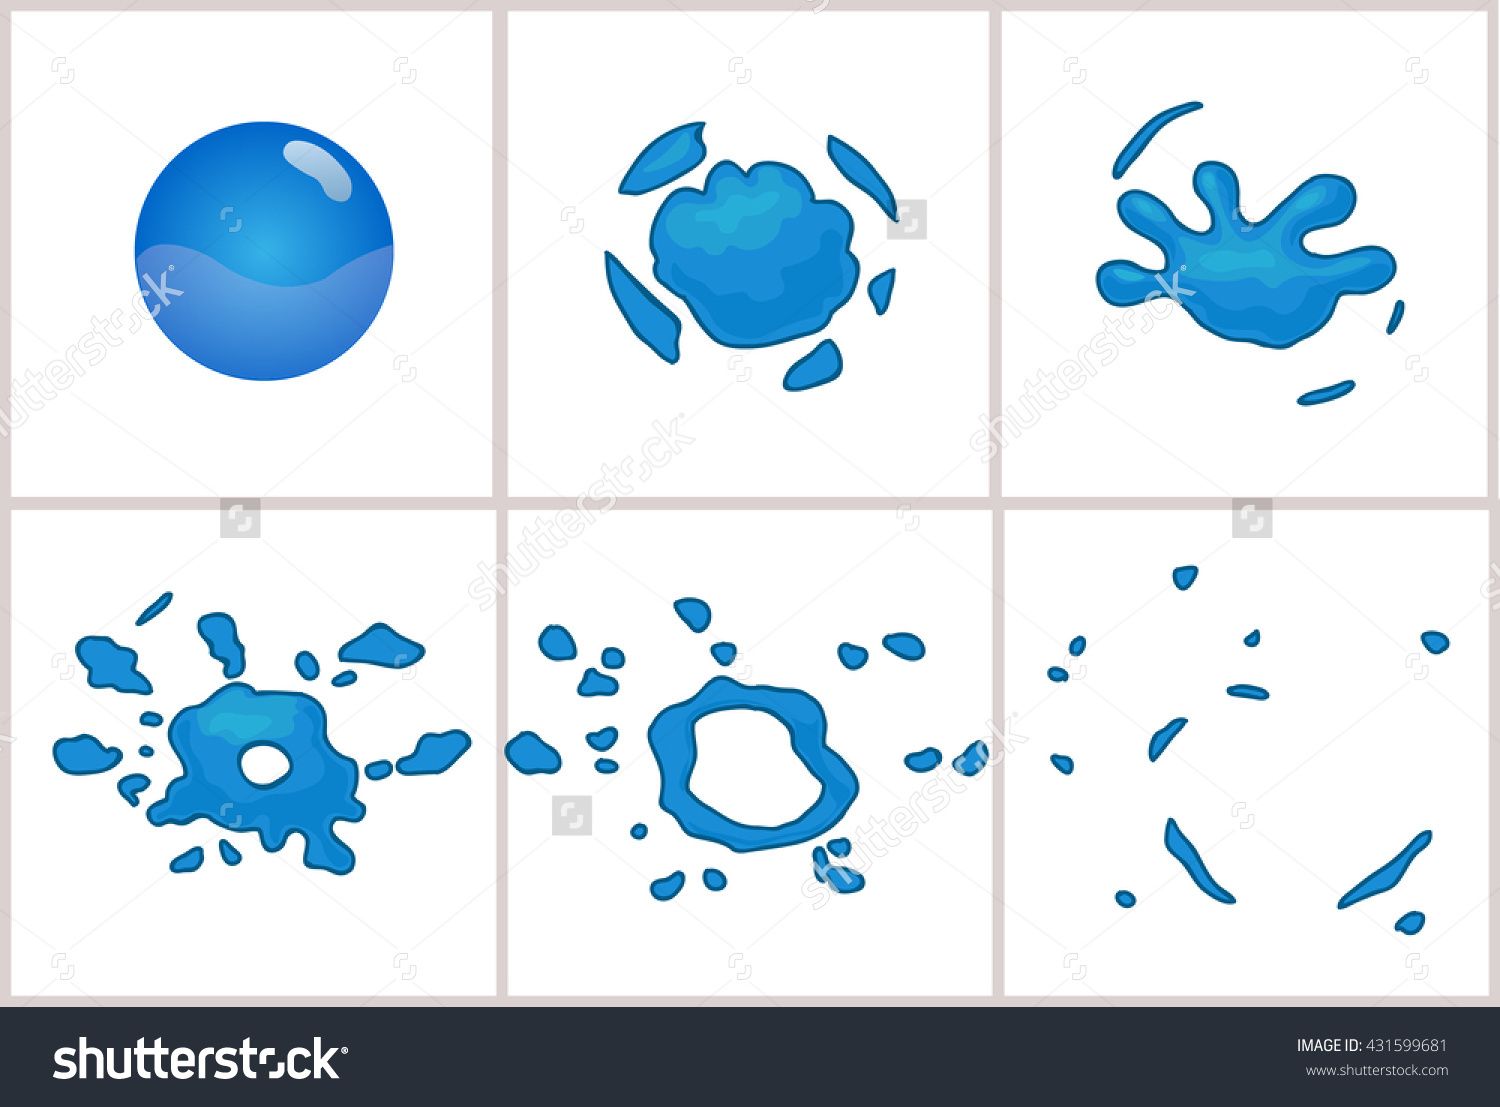 Bubble pop animation incep. Burst clipart animated